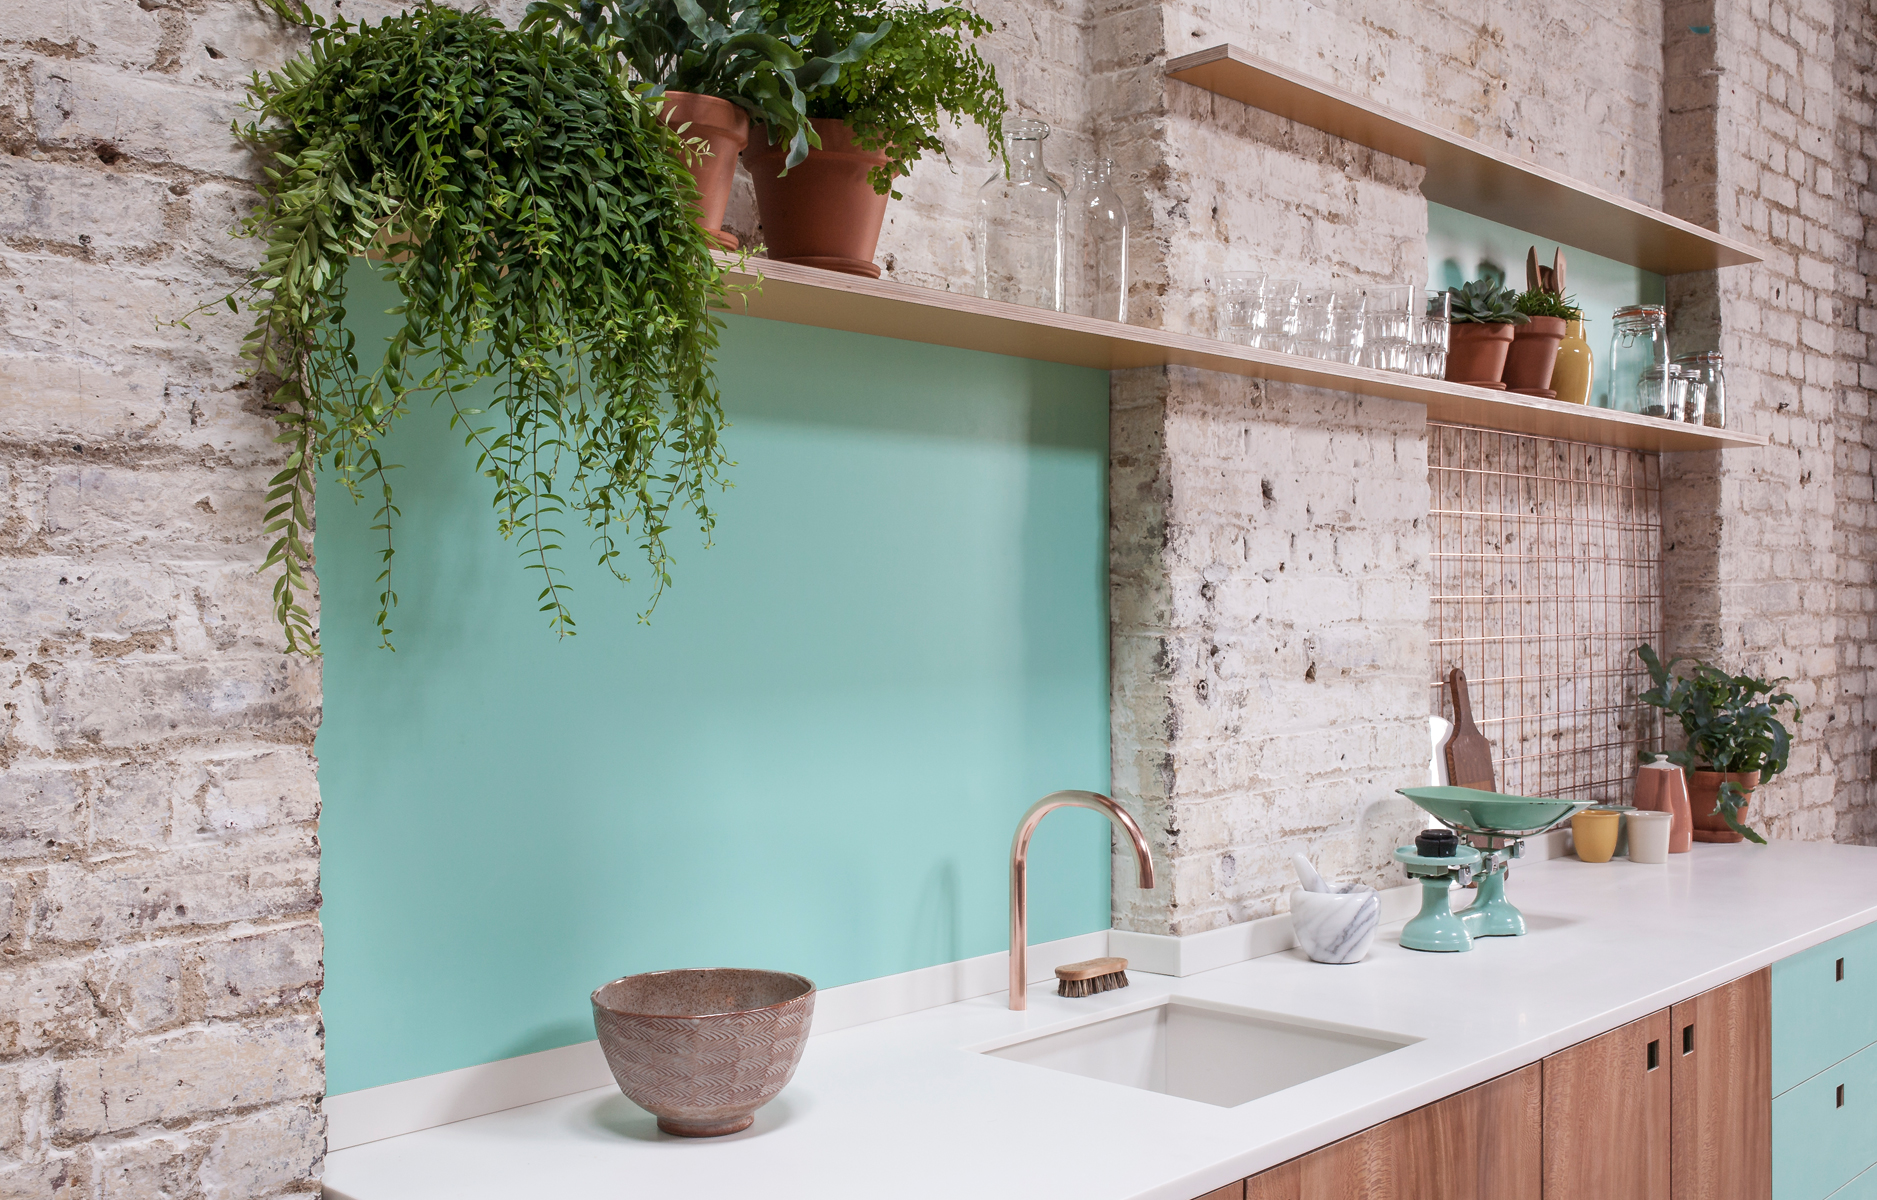 Aqua kitchen: one-color design inspiration - Bright Bazaar by Will